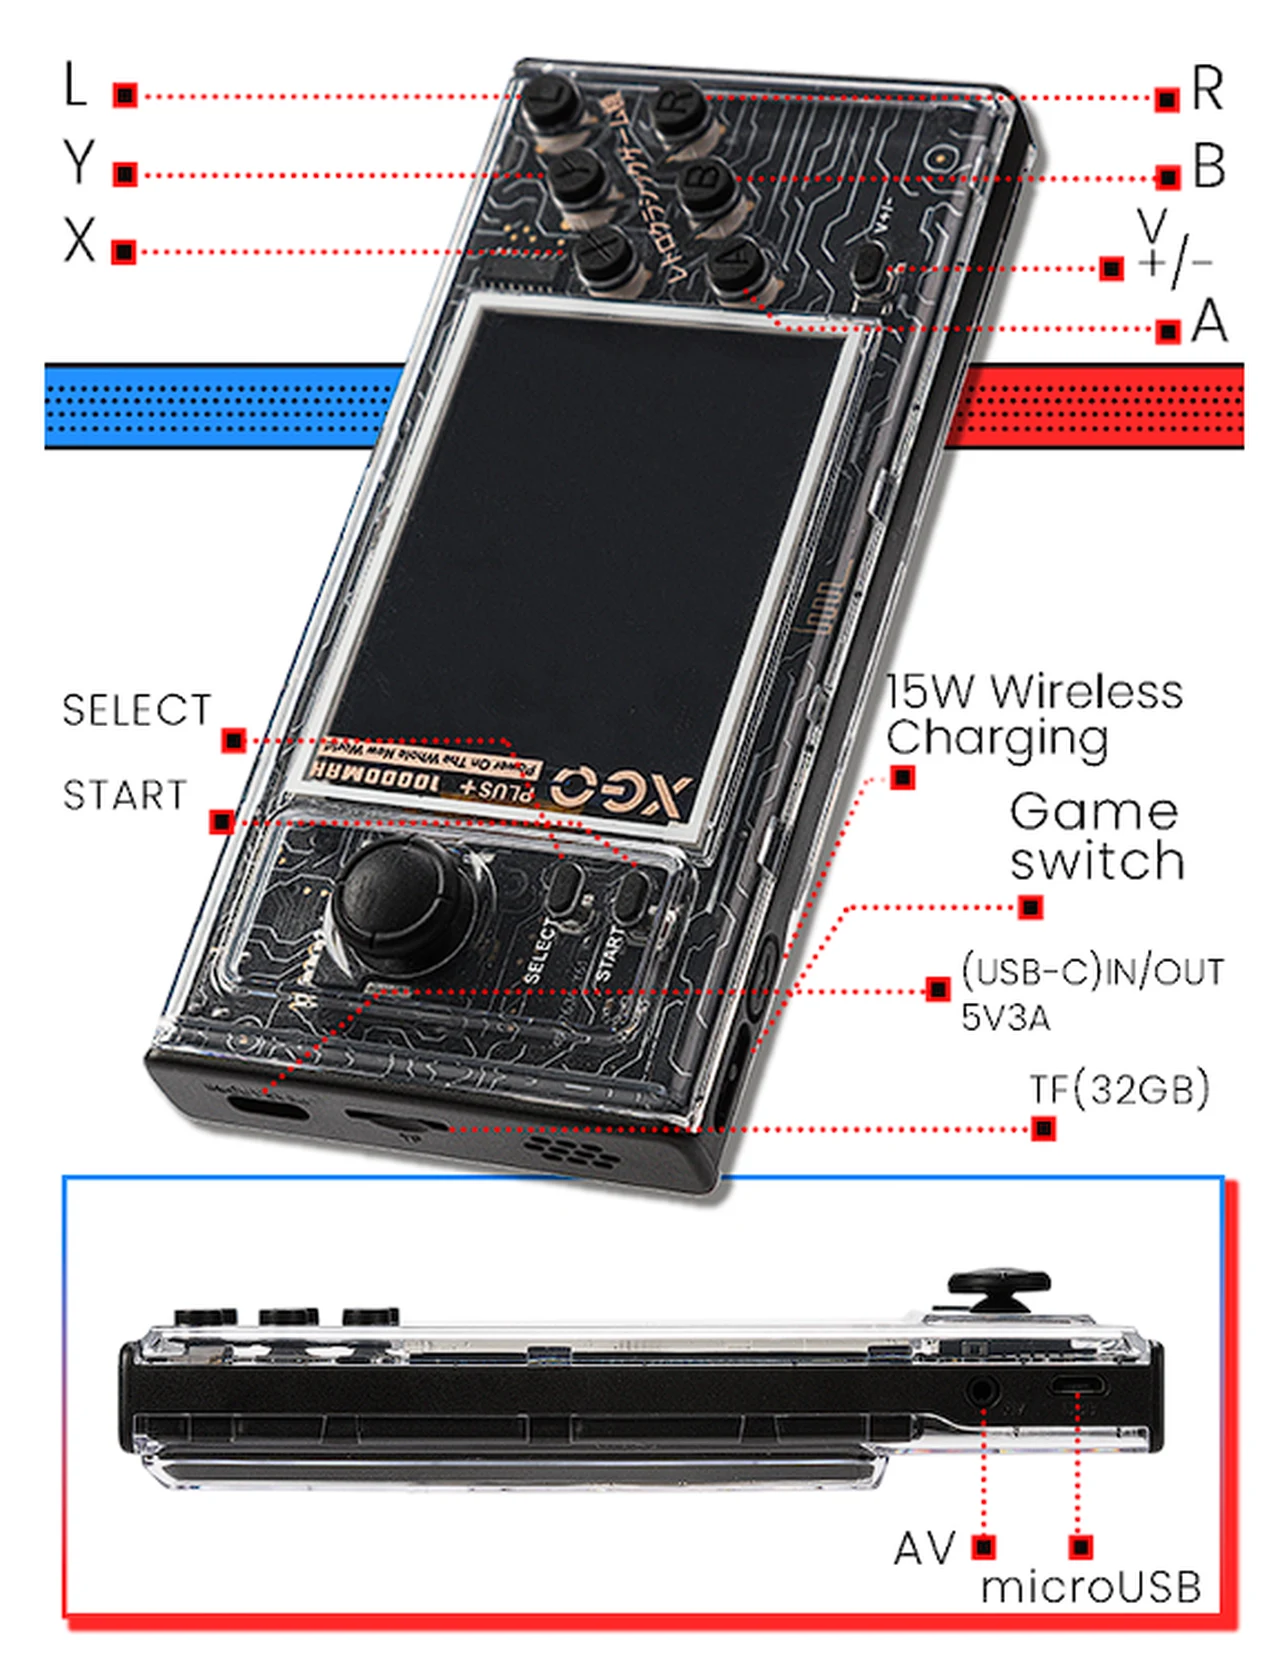 XGO retro gaming console features